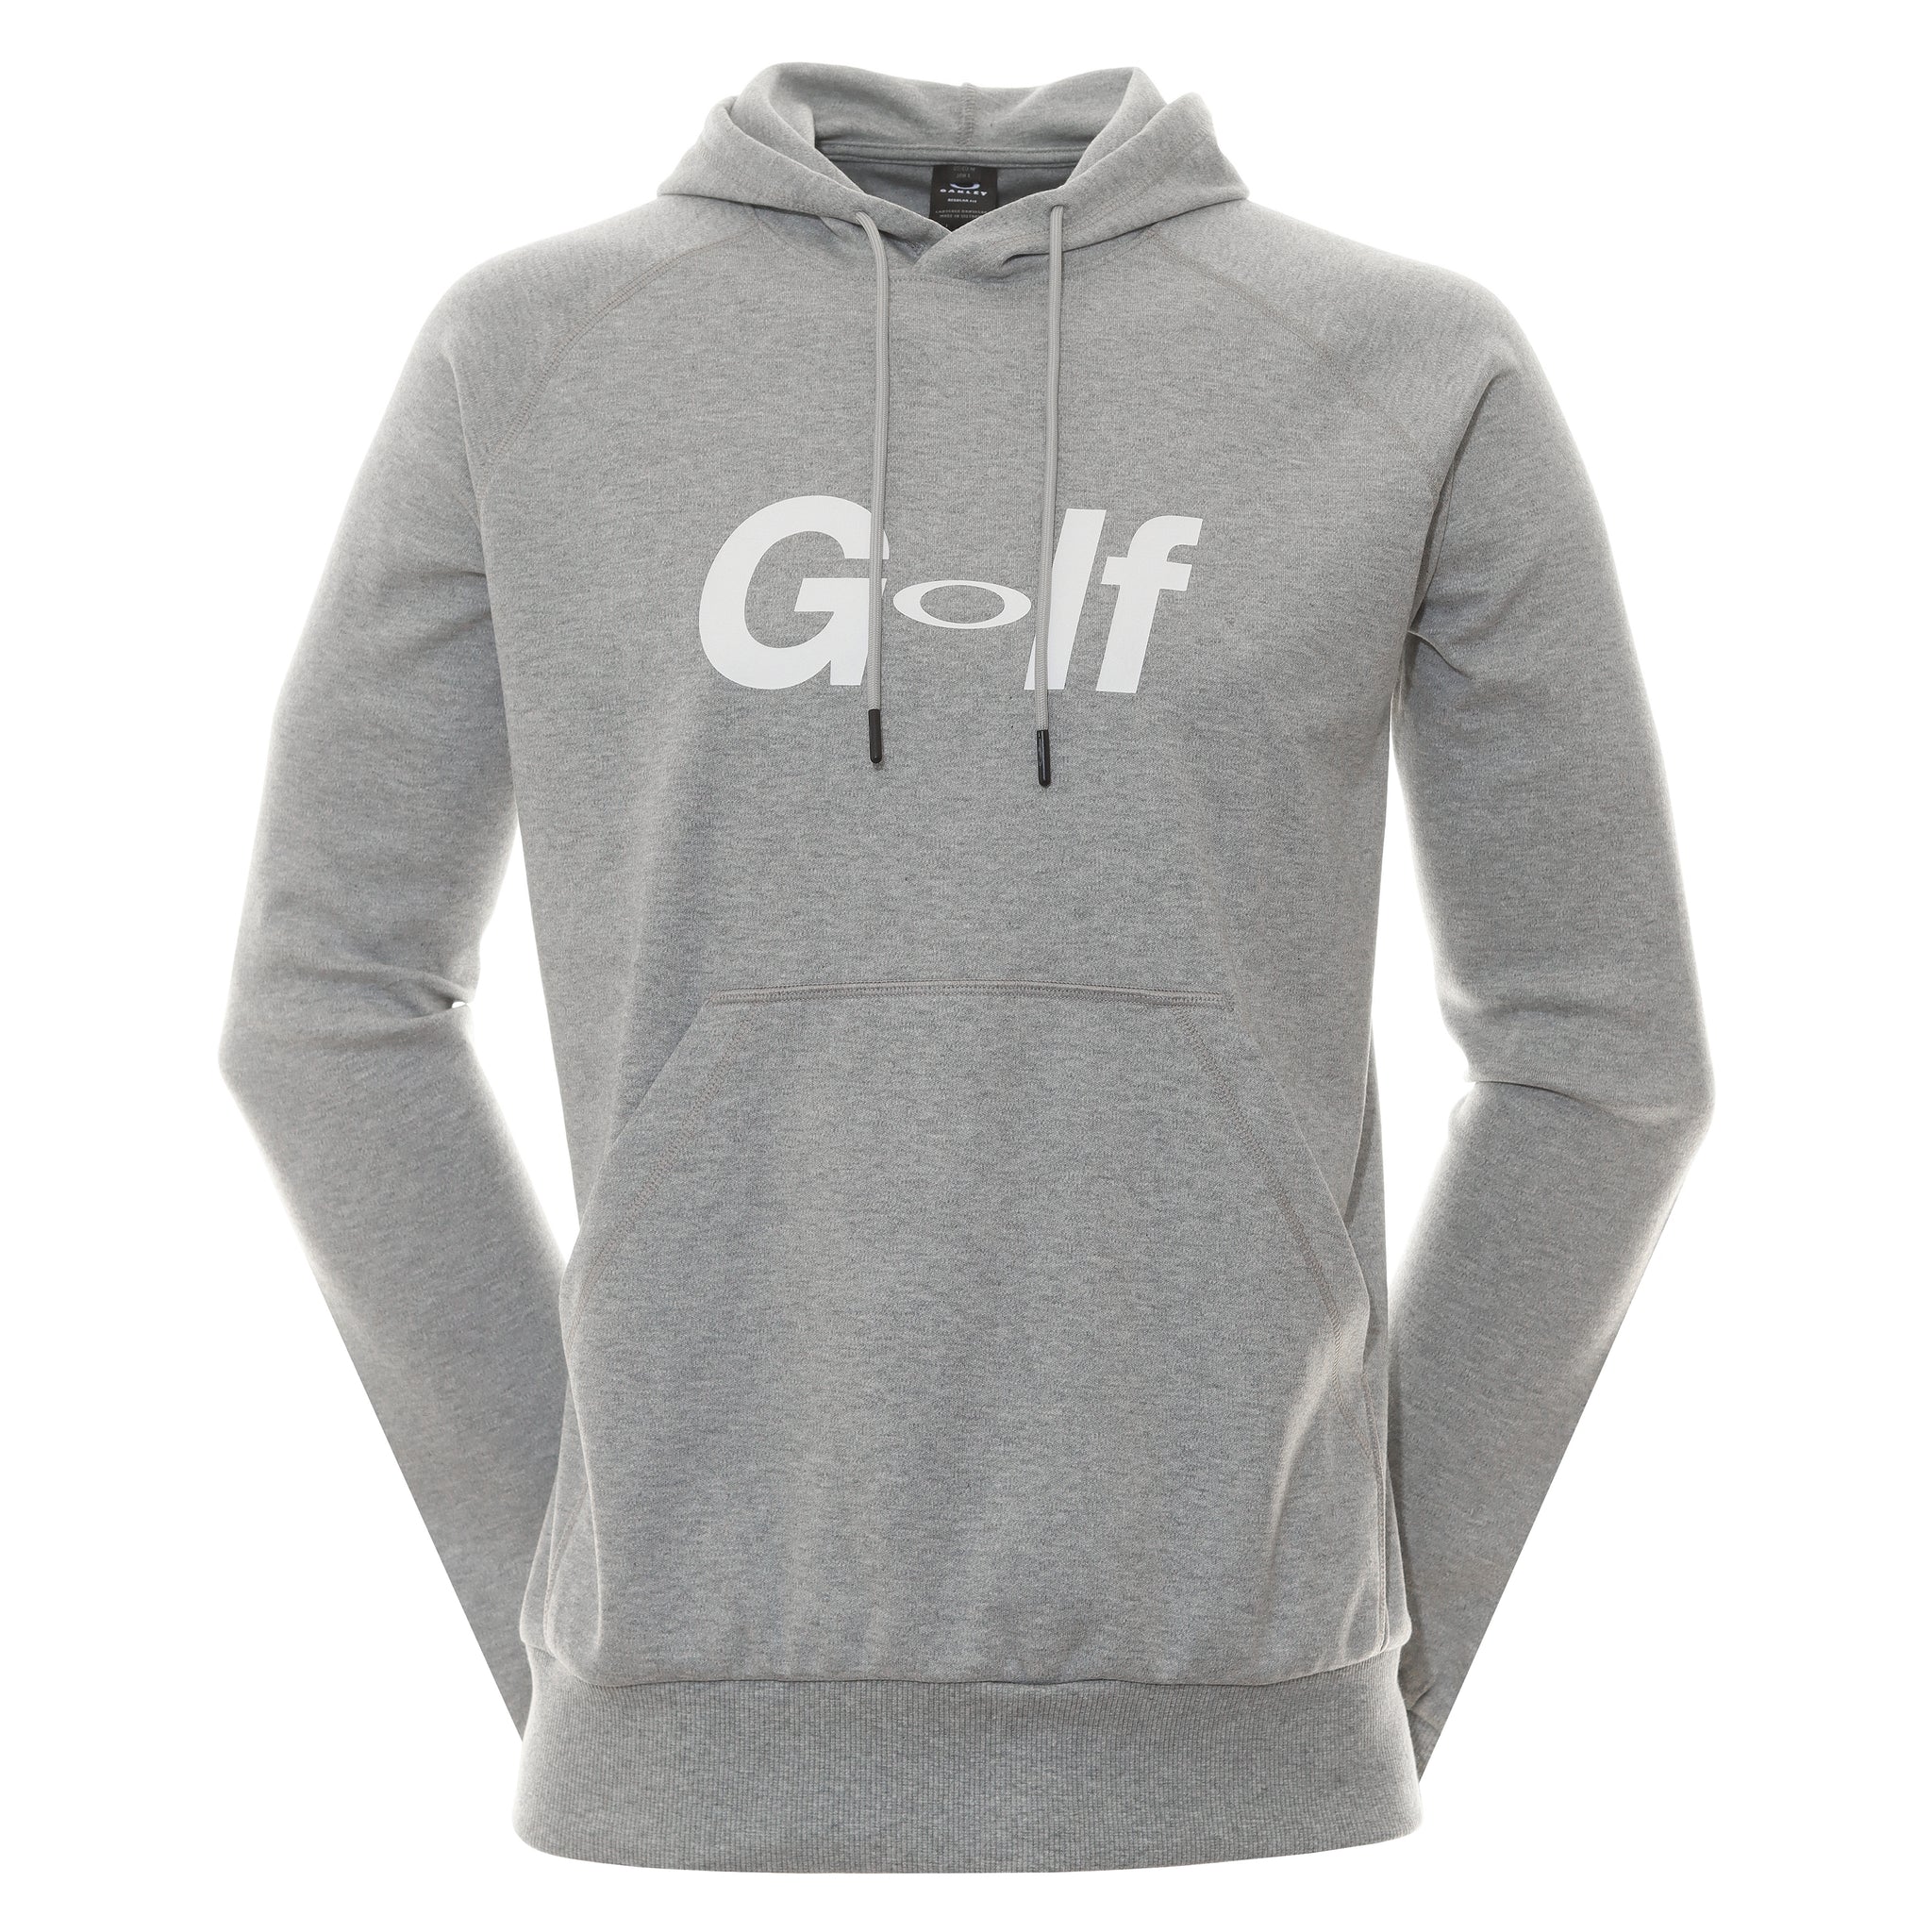 oakley-golf-mind-hoodie-404877-granite-heather-28b